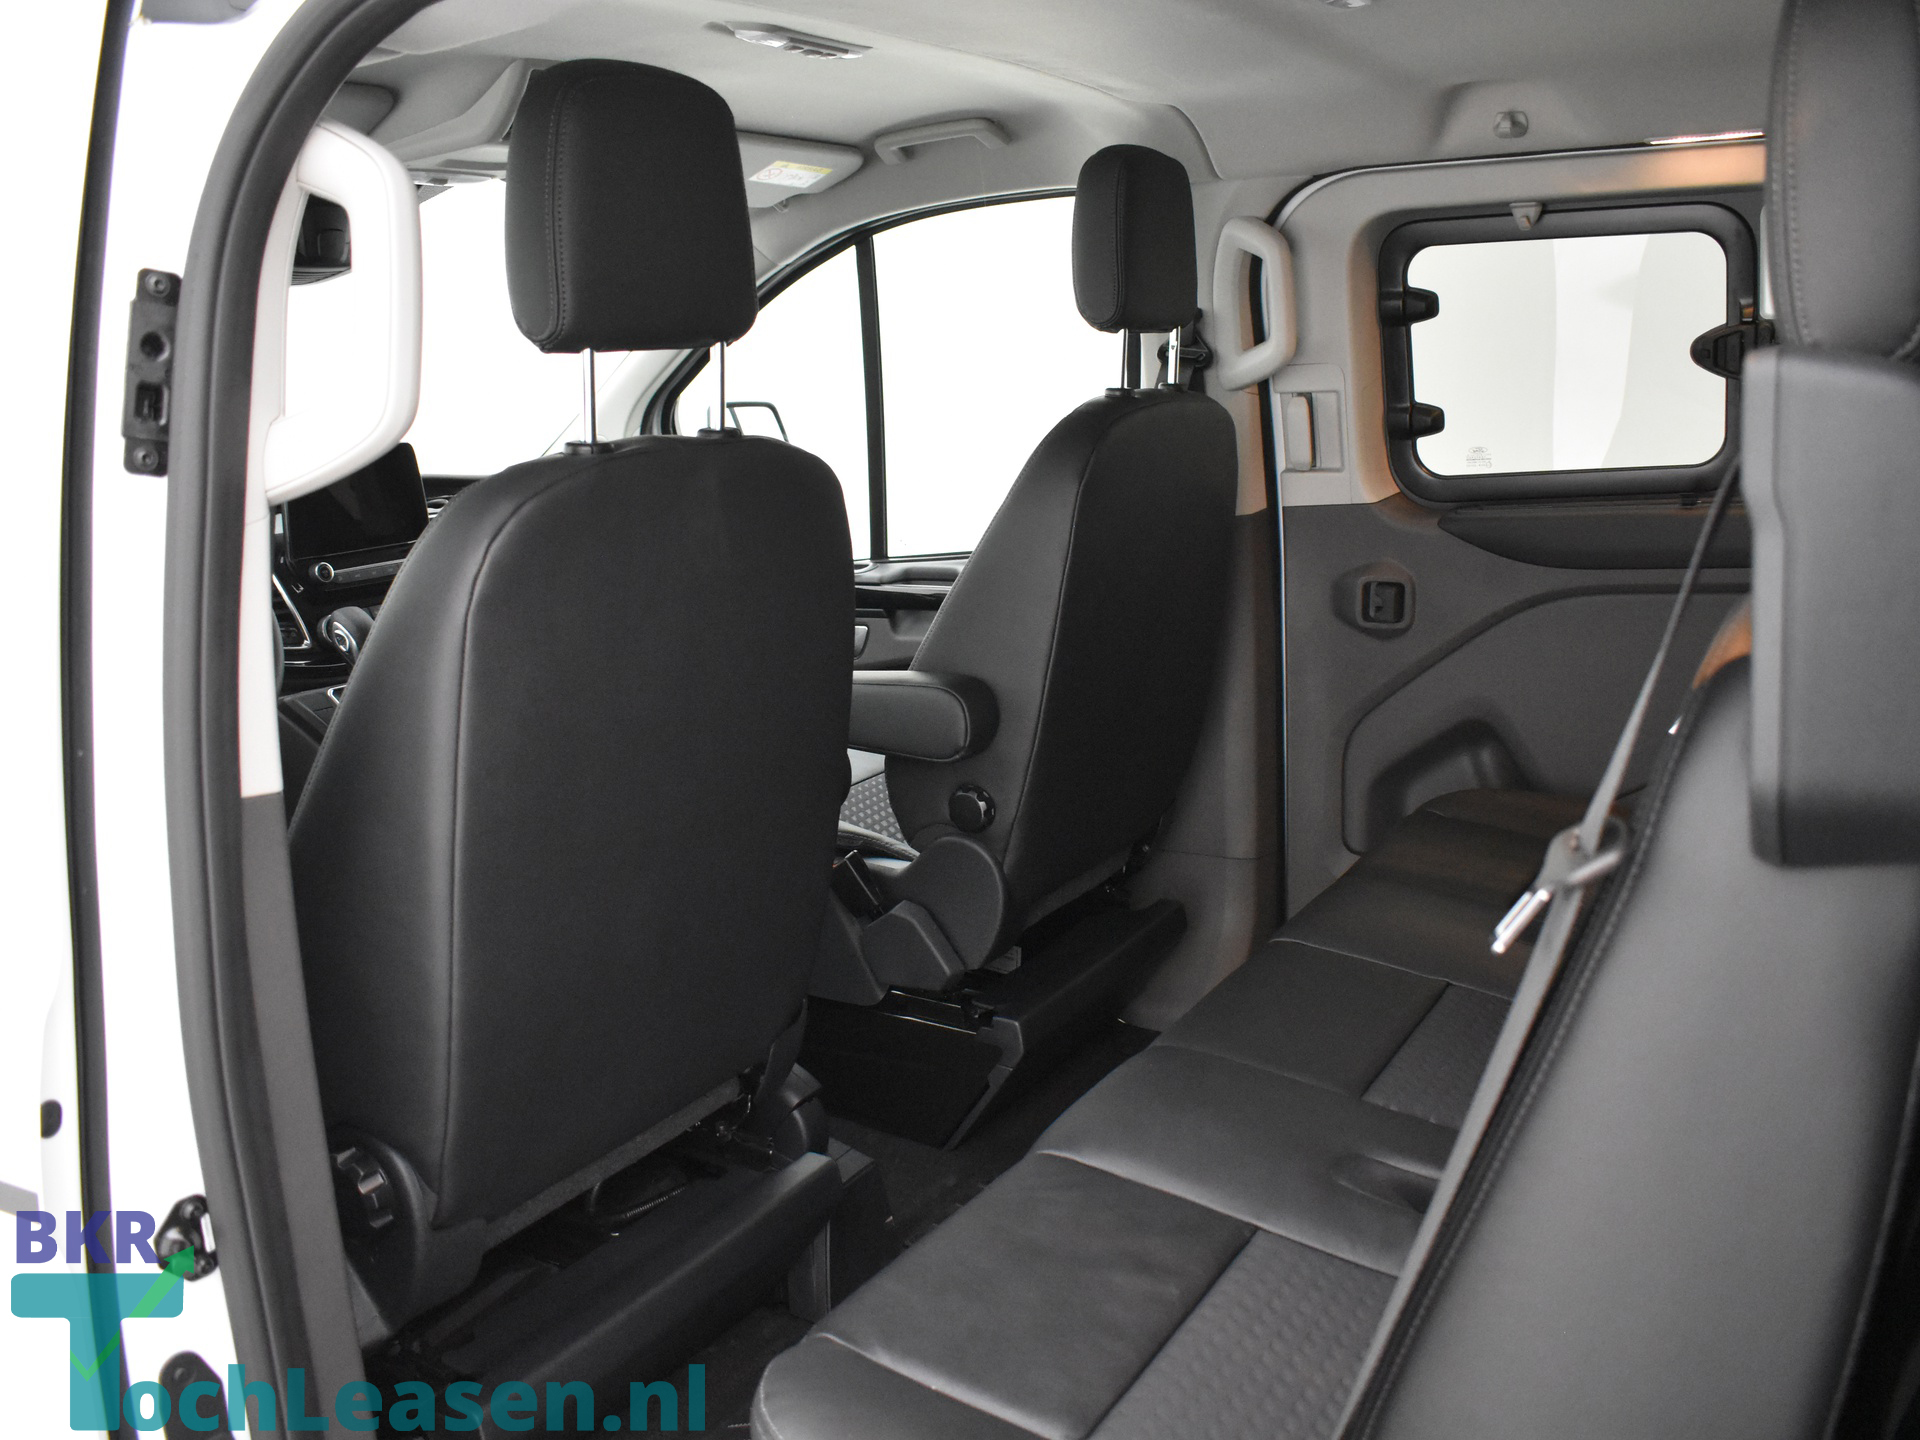 BKRtochleasen.nl - Ford Transit - Wit sport28